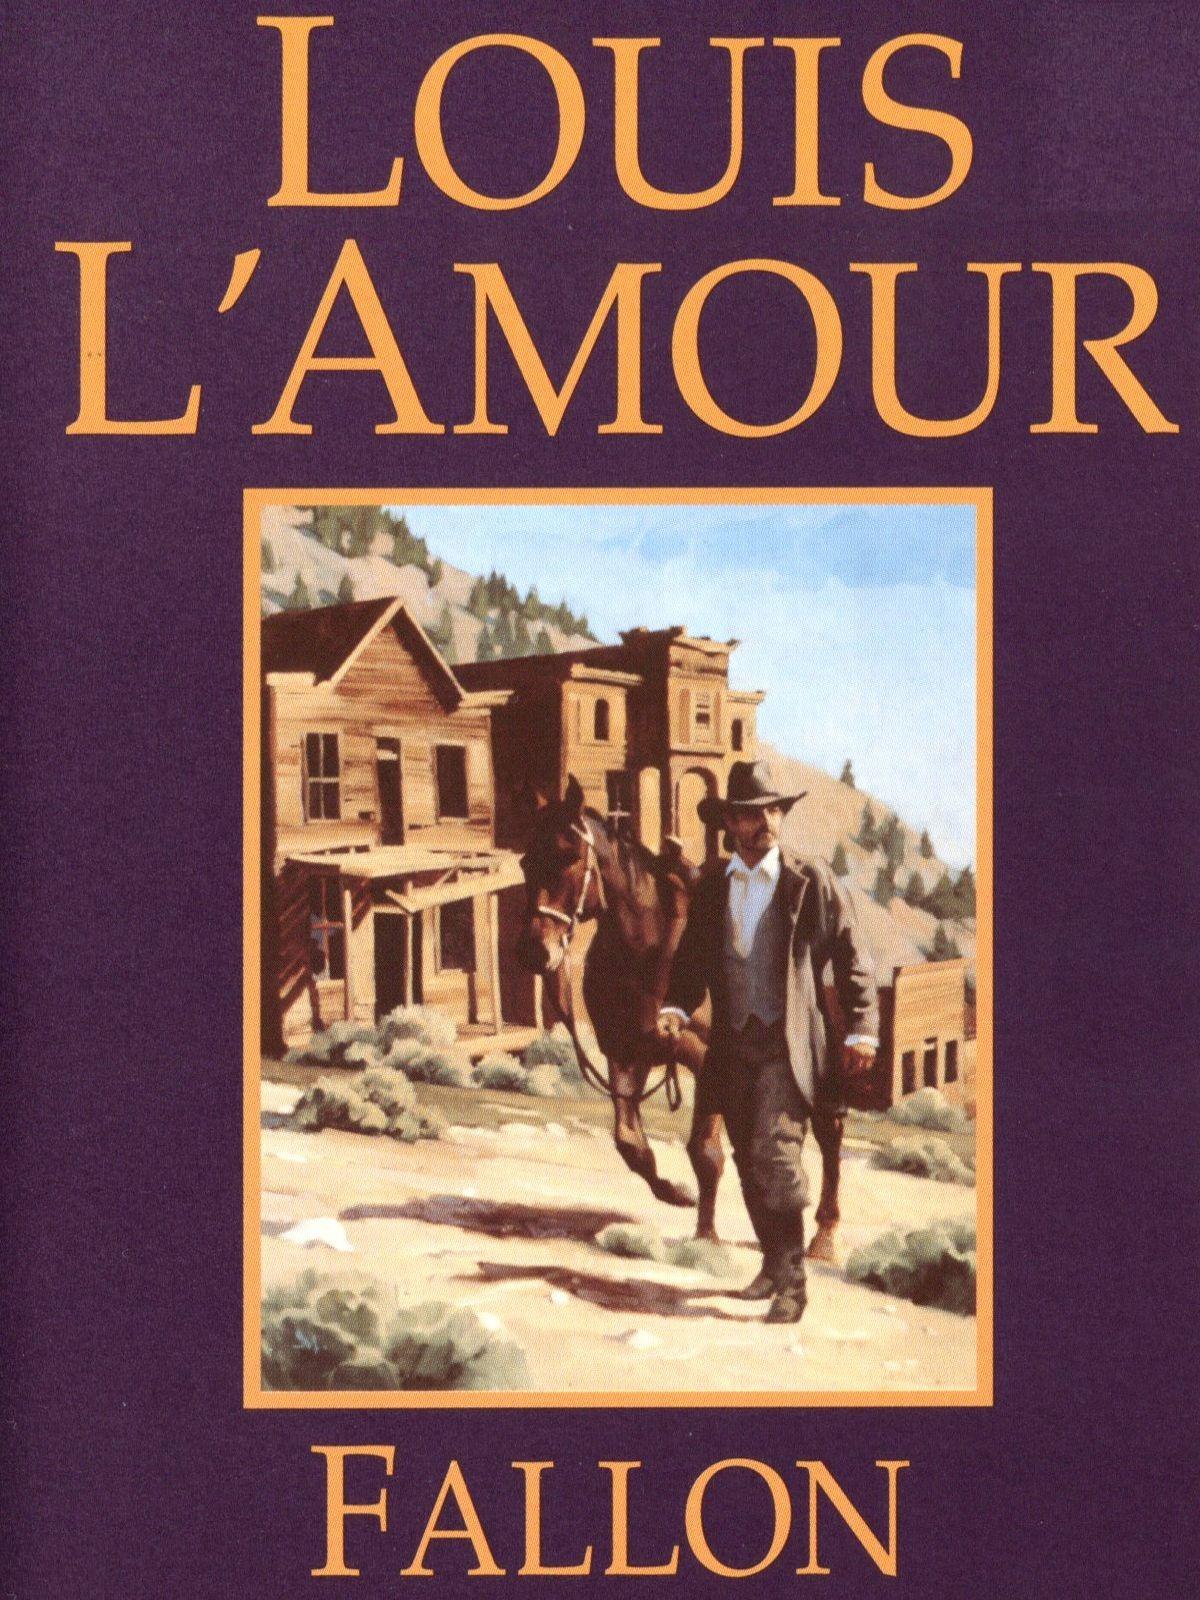 Novel 1963 - Fallon (v5.0) by Louis L'Amour